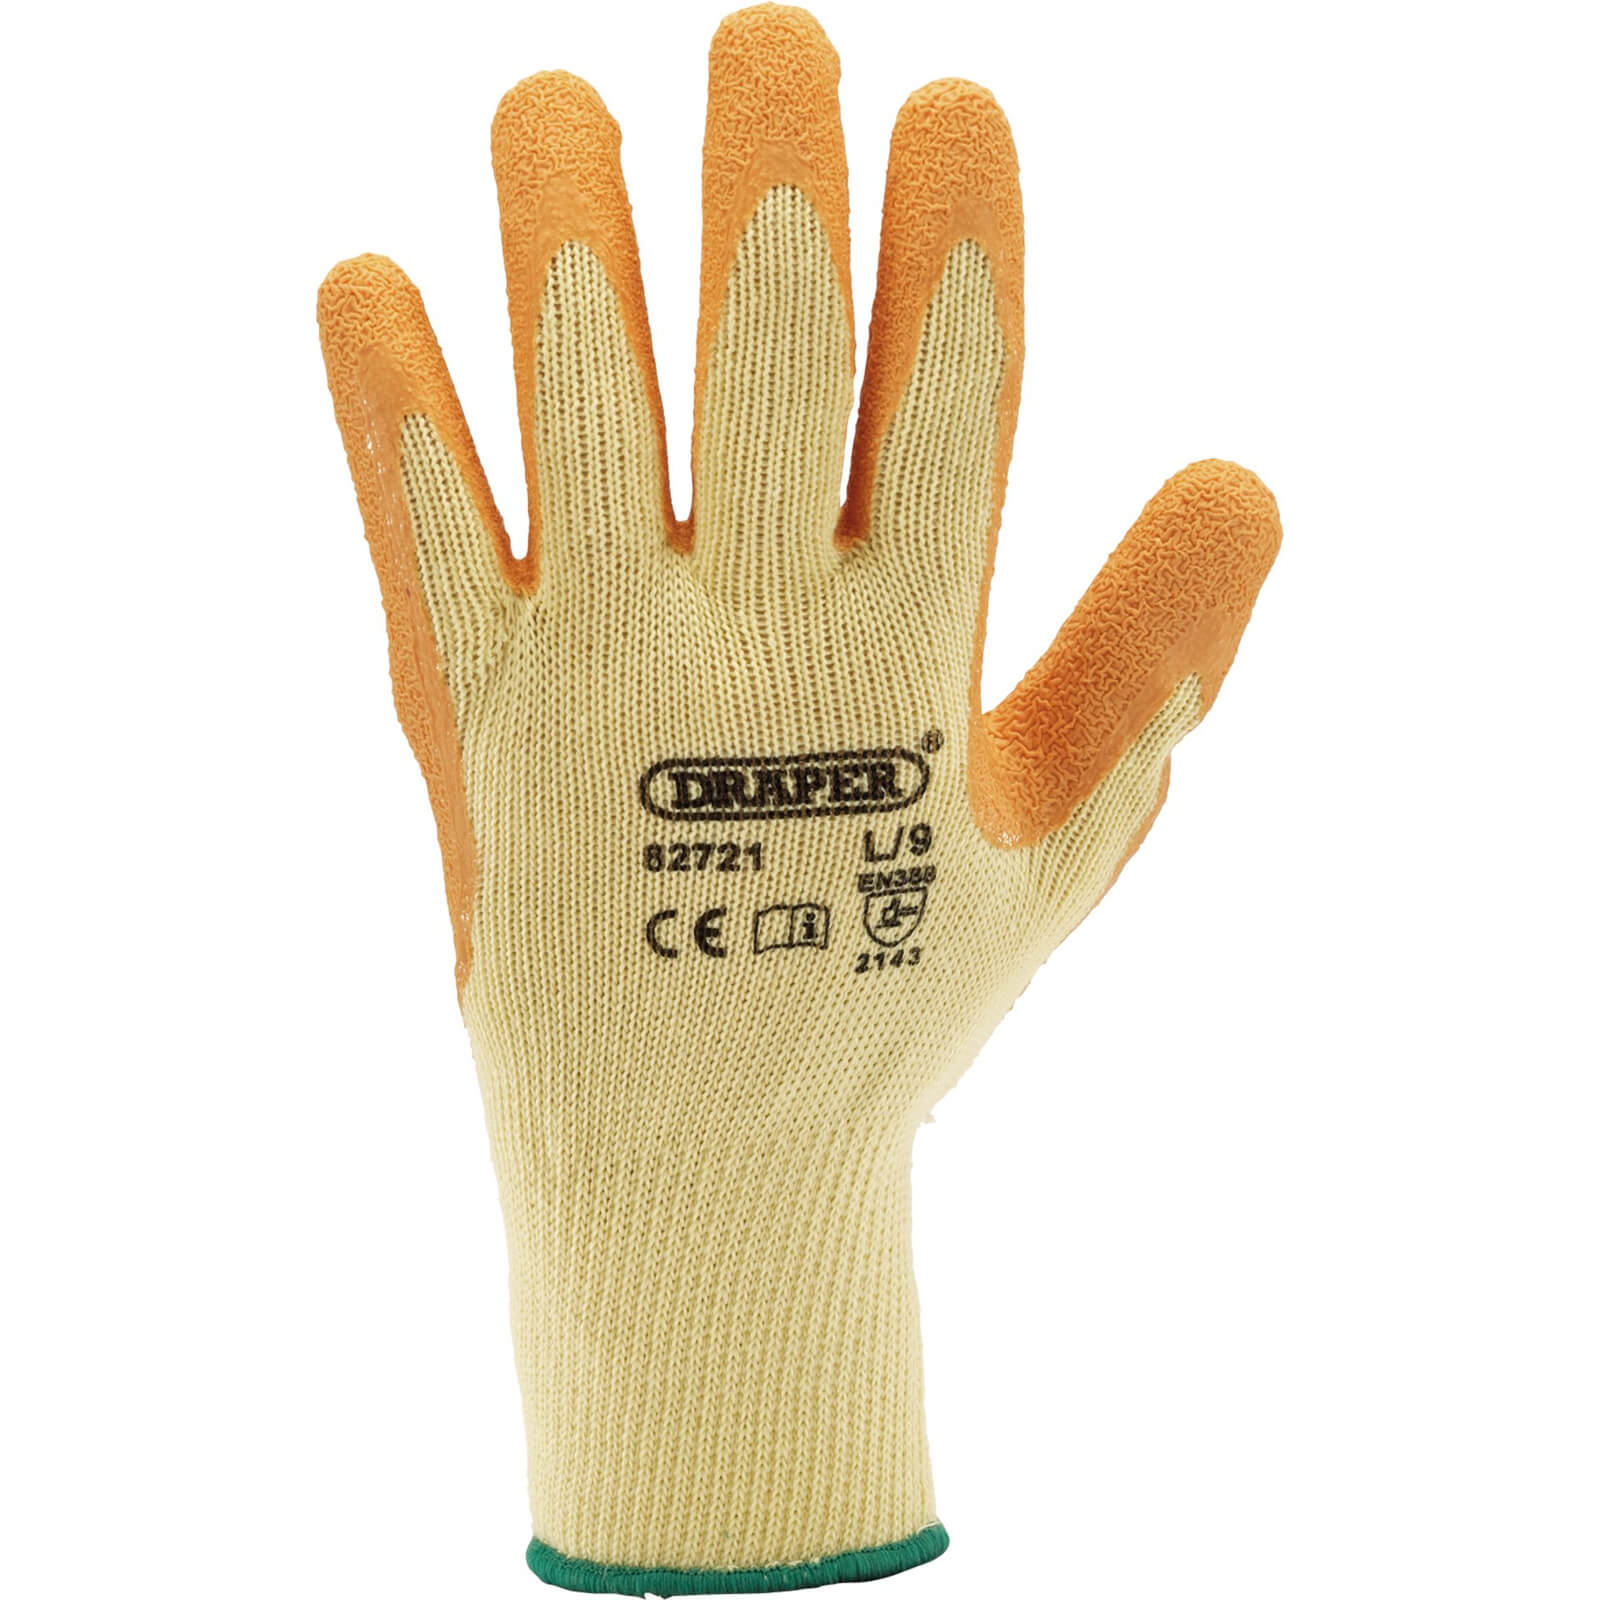 Image of Draper Orange Heavy Duty Latex Coated Work Gloves Yellow / Orange M